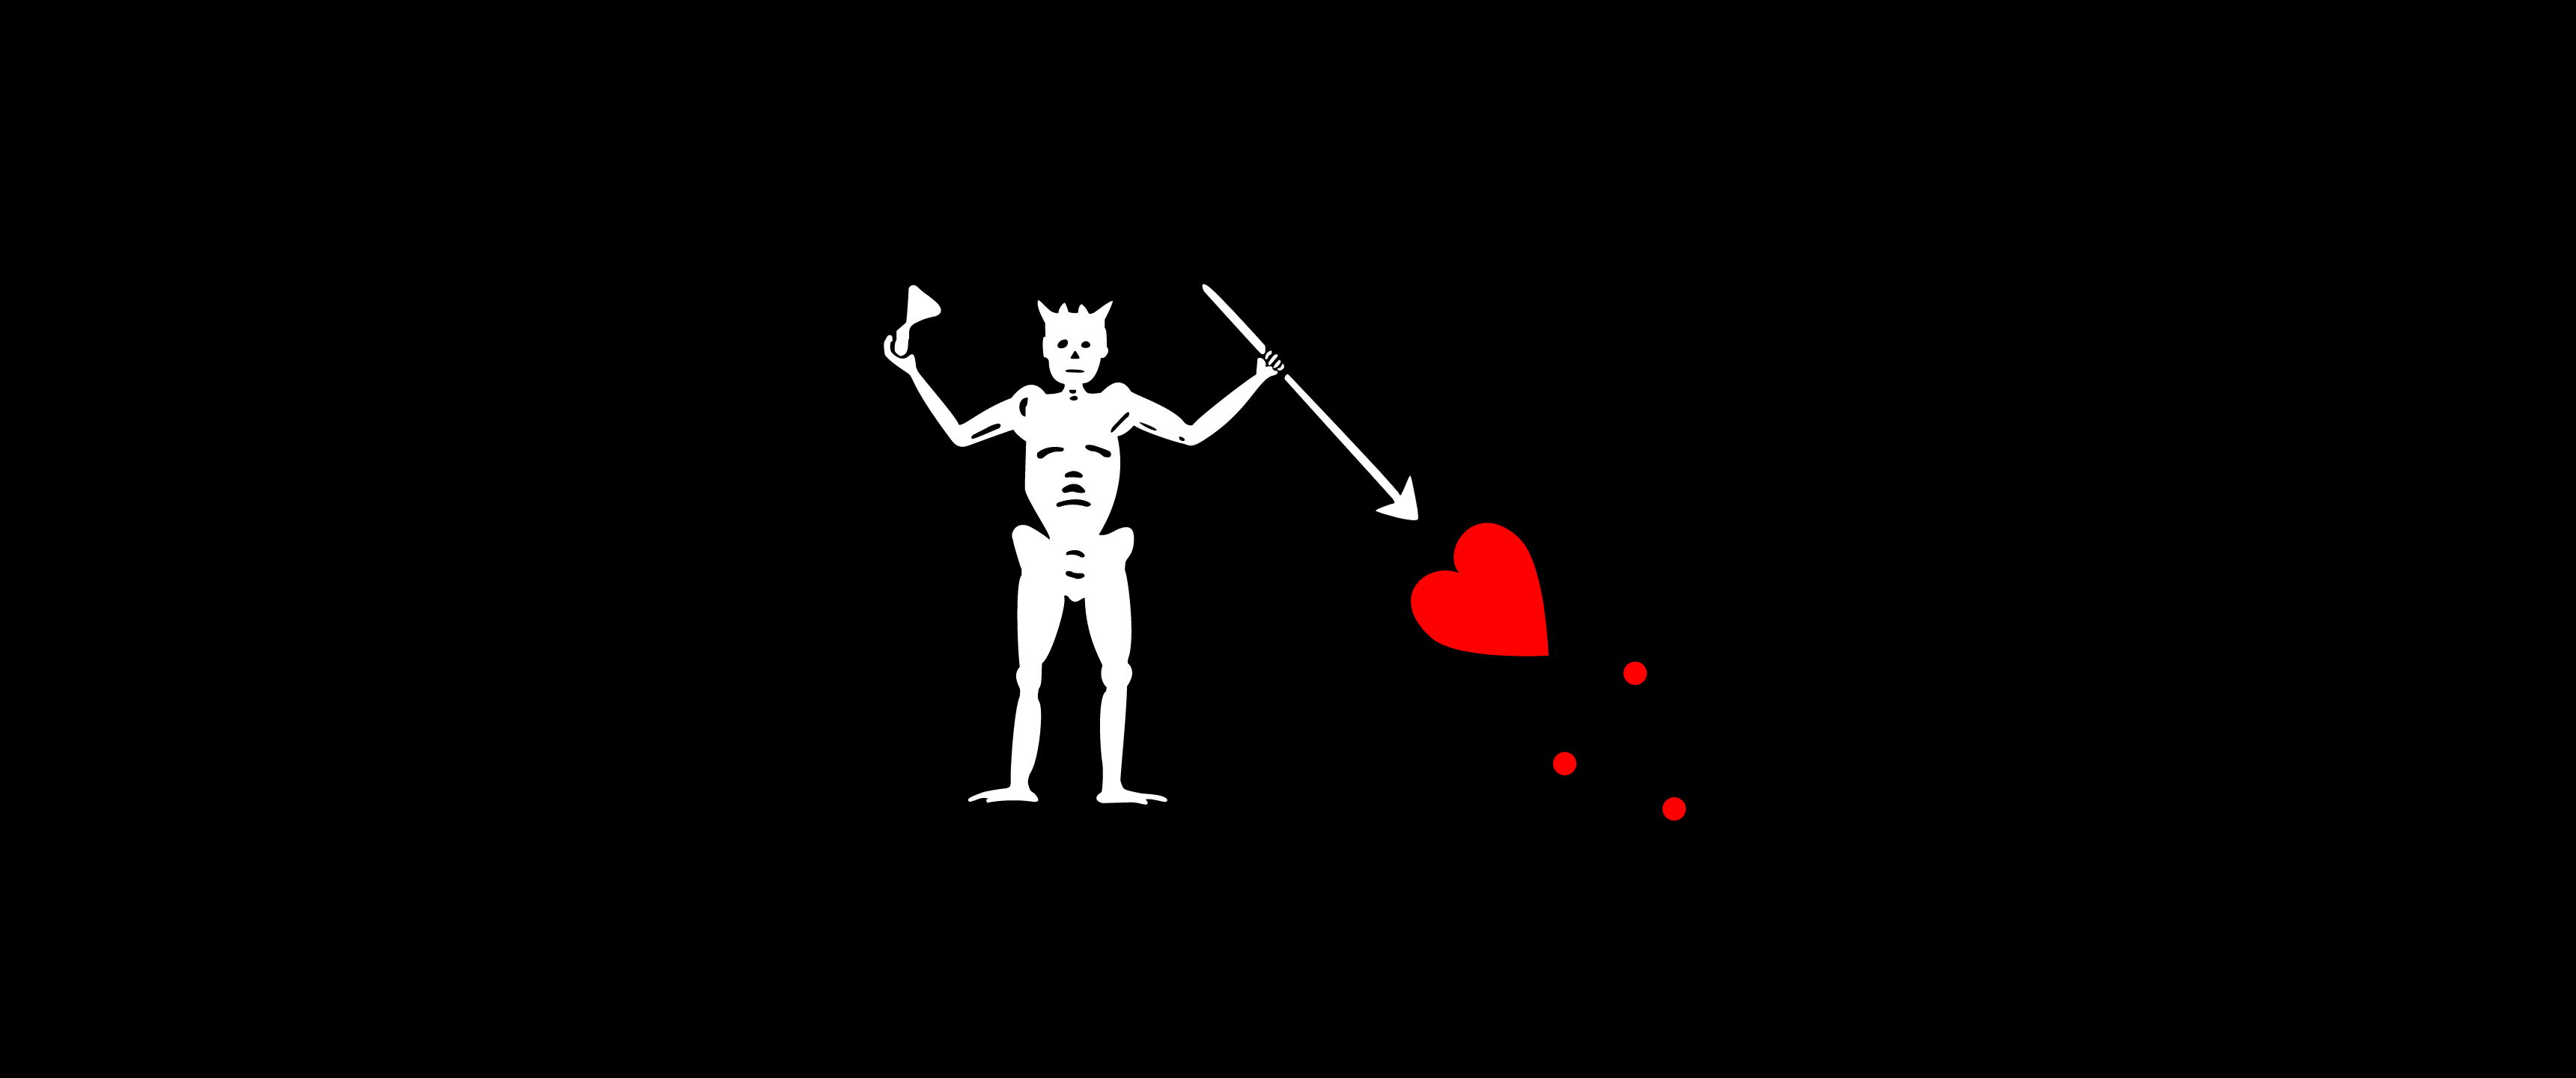 General 3440x1440 flag simple background black background heart skeleton weapon minimalism Blackbeard